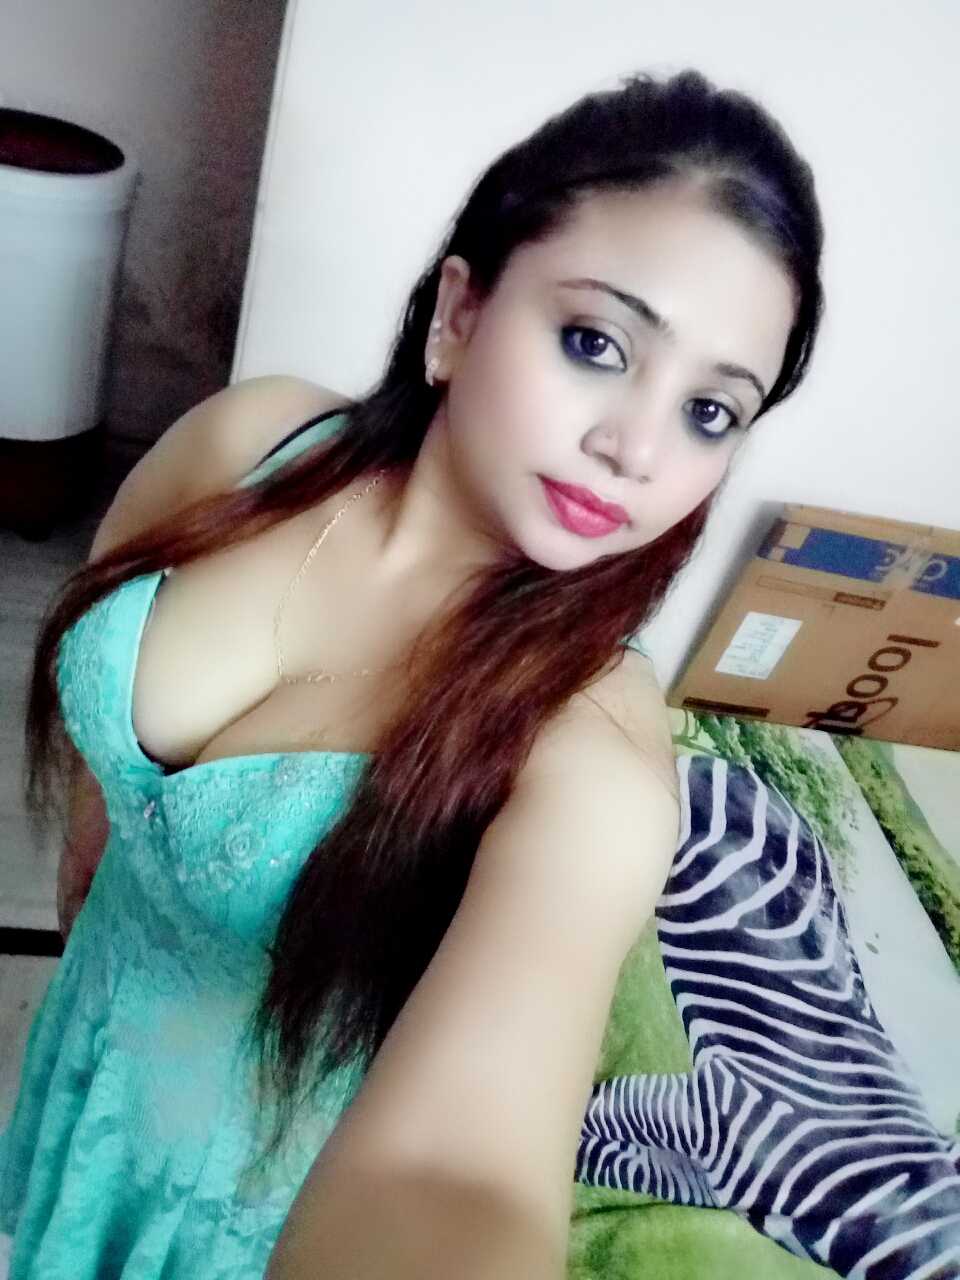 Apsara Sharma